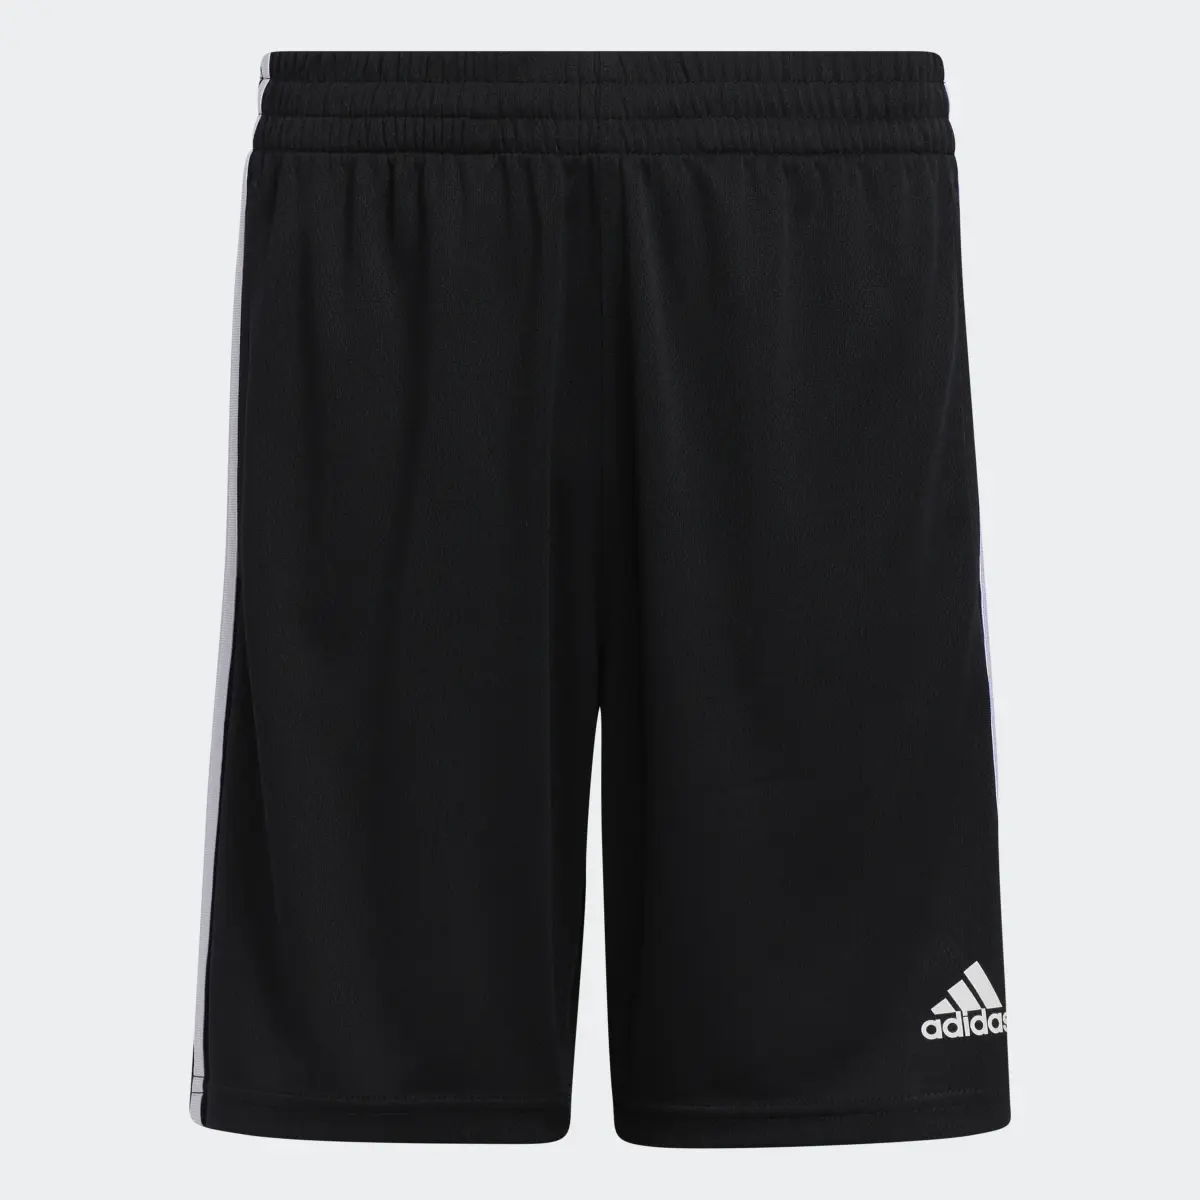 Adidas Classic 3-Stripes Shorts. 1